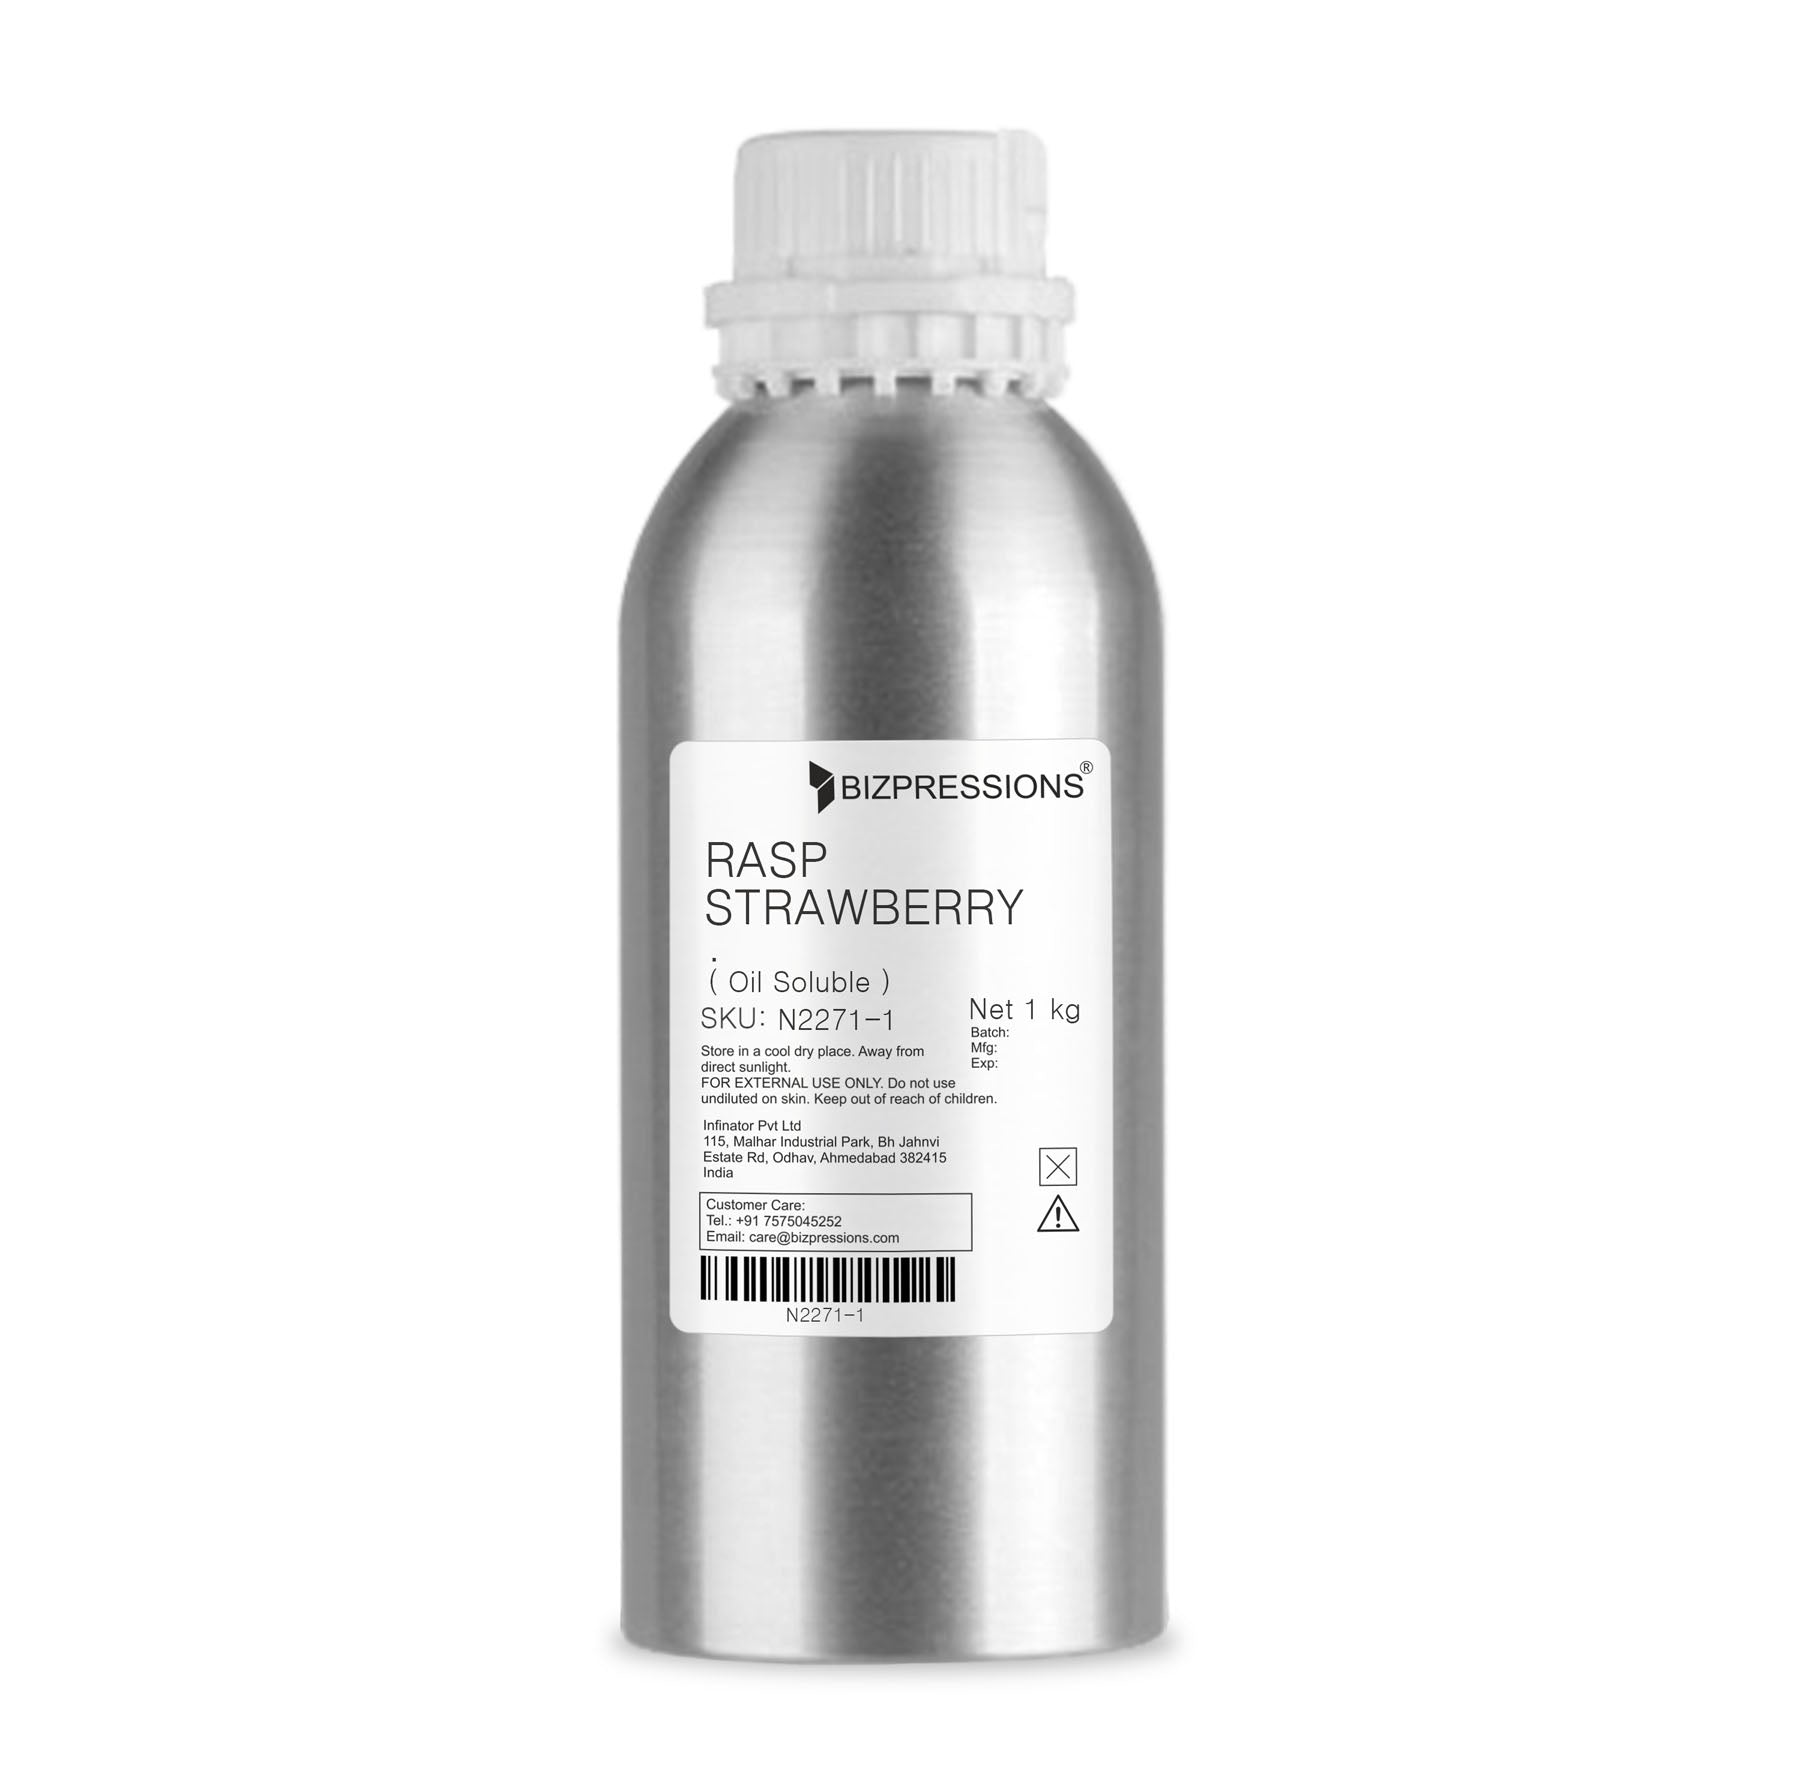 RASP STRAWBERRY - Fragrance ( Oil Soluble ) - 1 kg